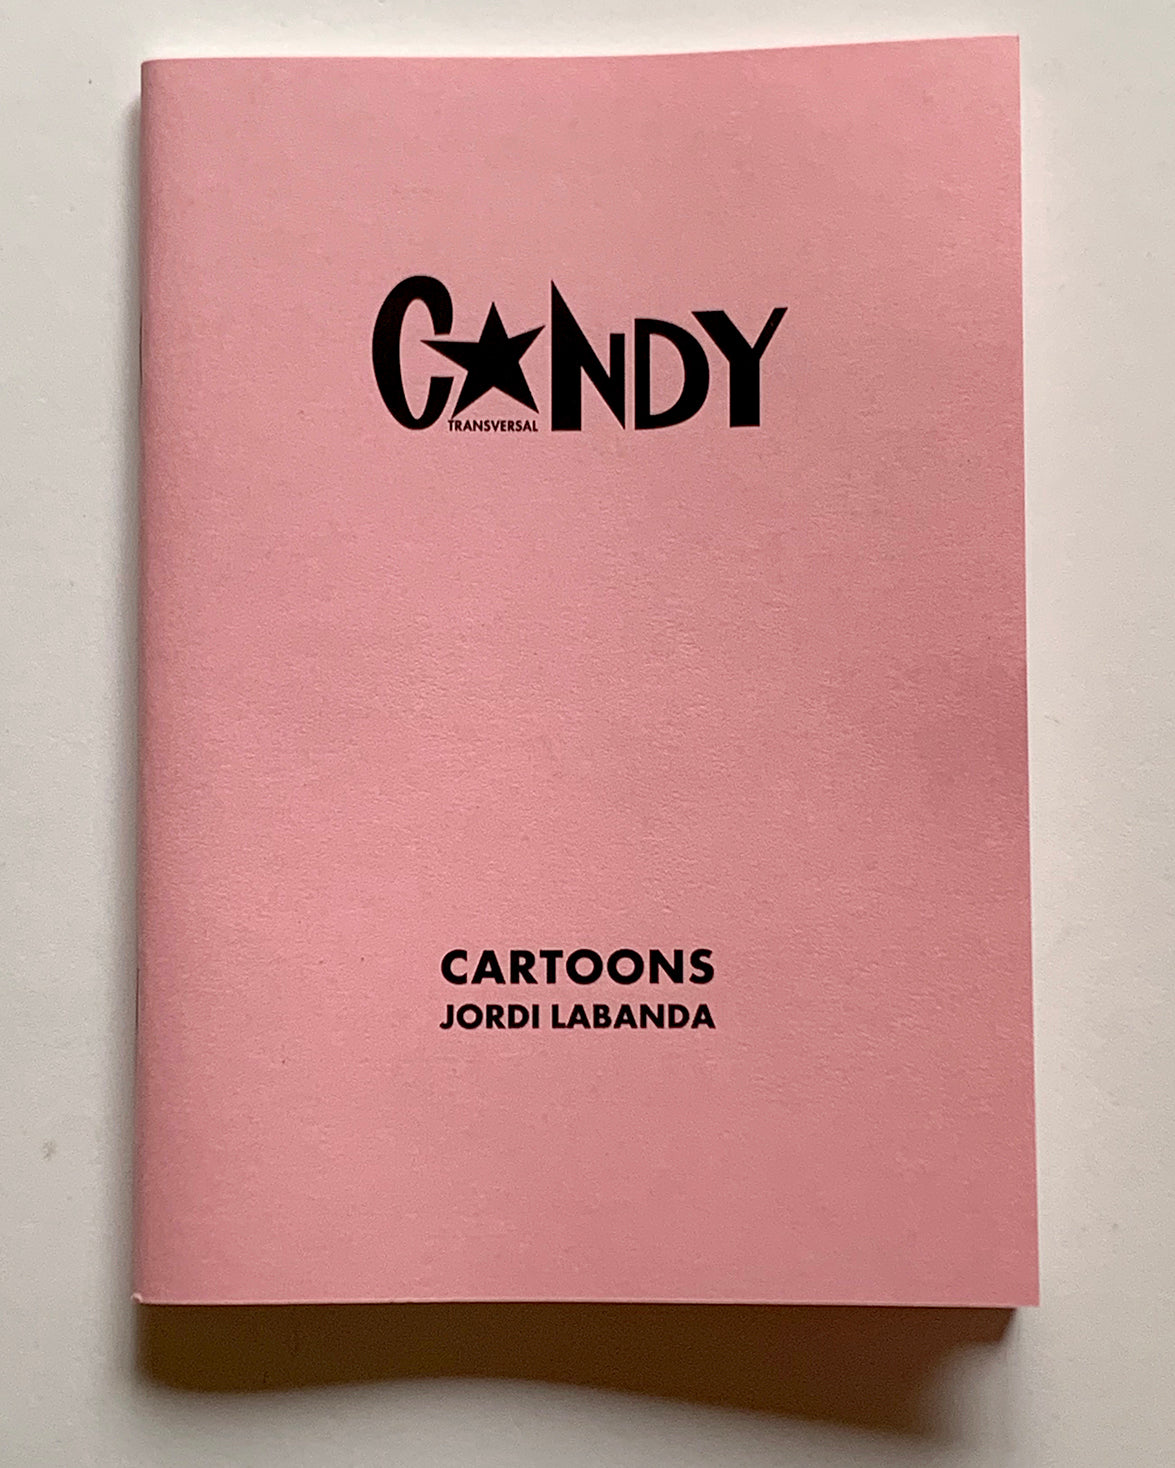 C☆NDY CARTOONS + 032c + JORDI LABANDA